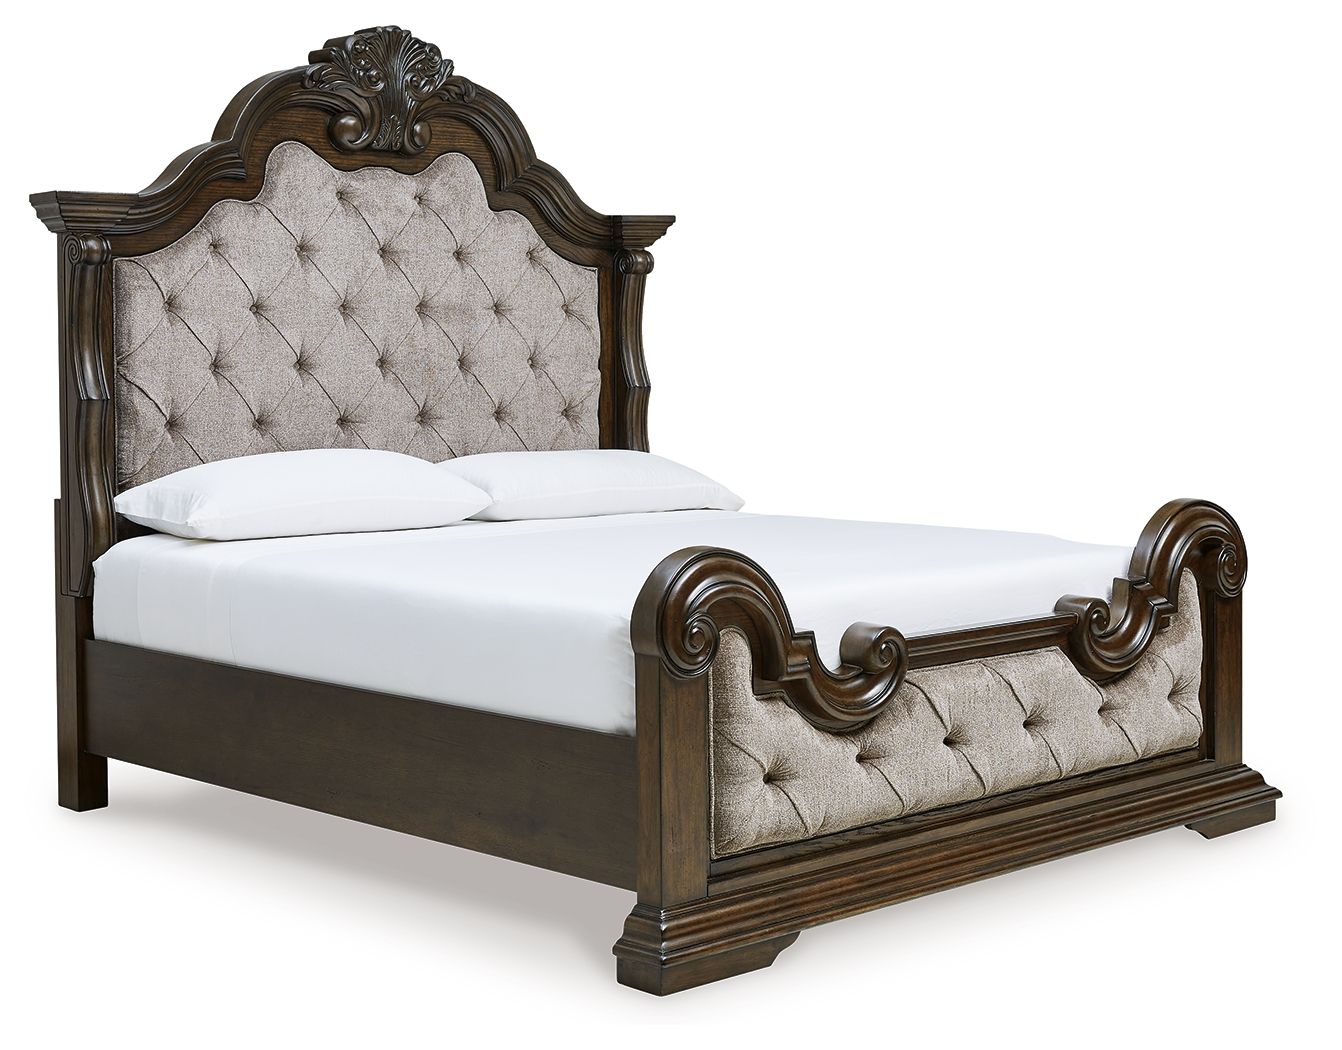 Maylee - Dark Brown - 8 Pc. - Dresser, Mirror, Chest, King Upholstered Bed, 2 Nightstands